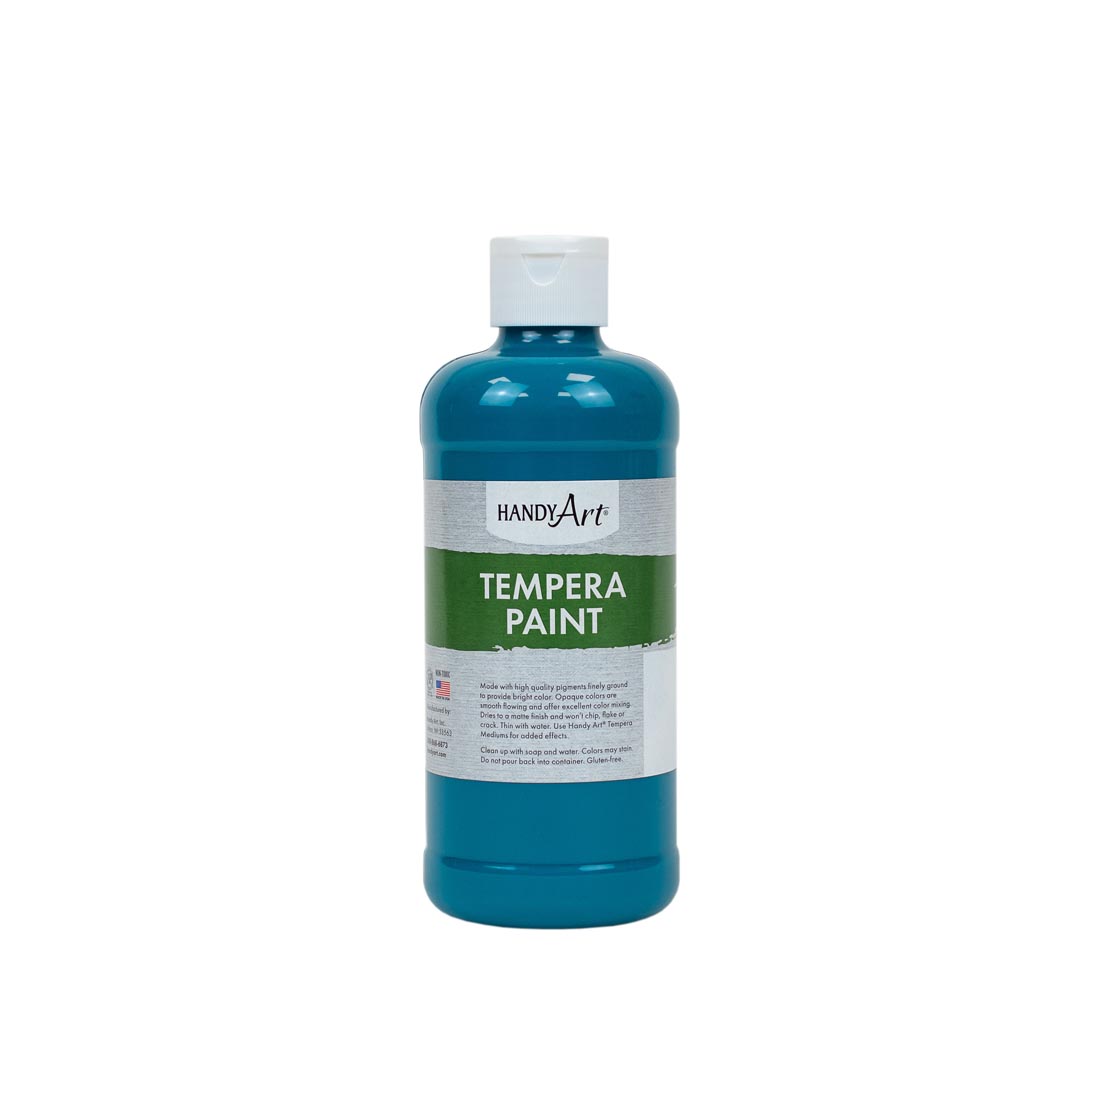 Pint bottle of Turquoise Handy Art Tempera Paint